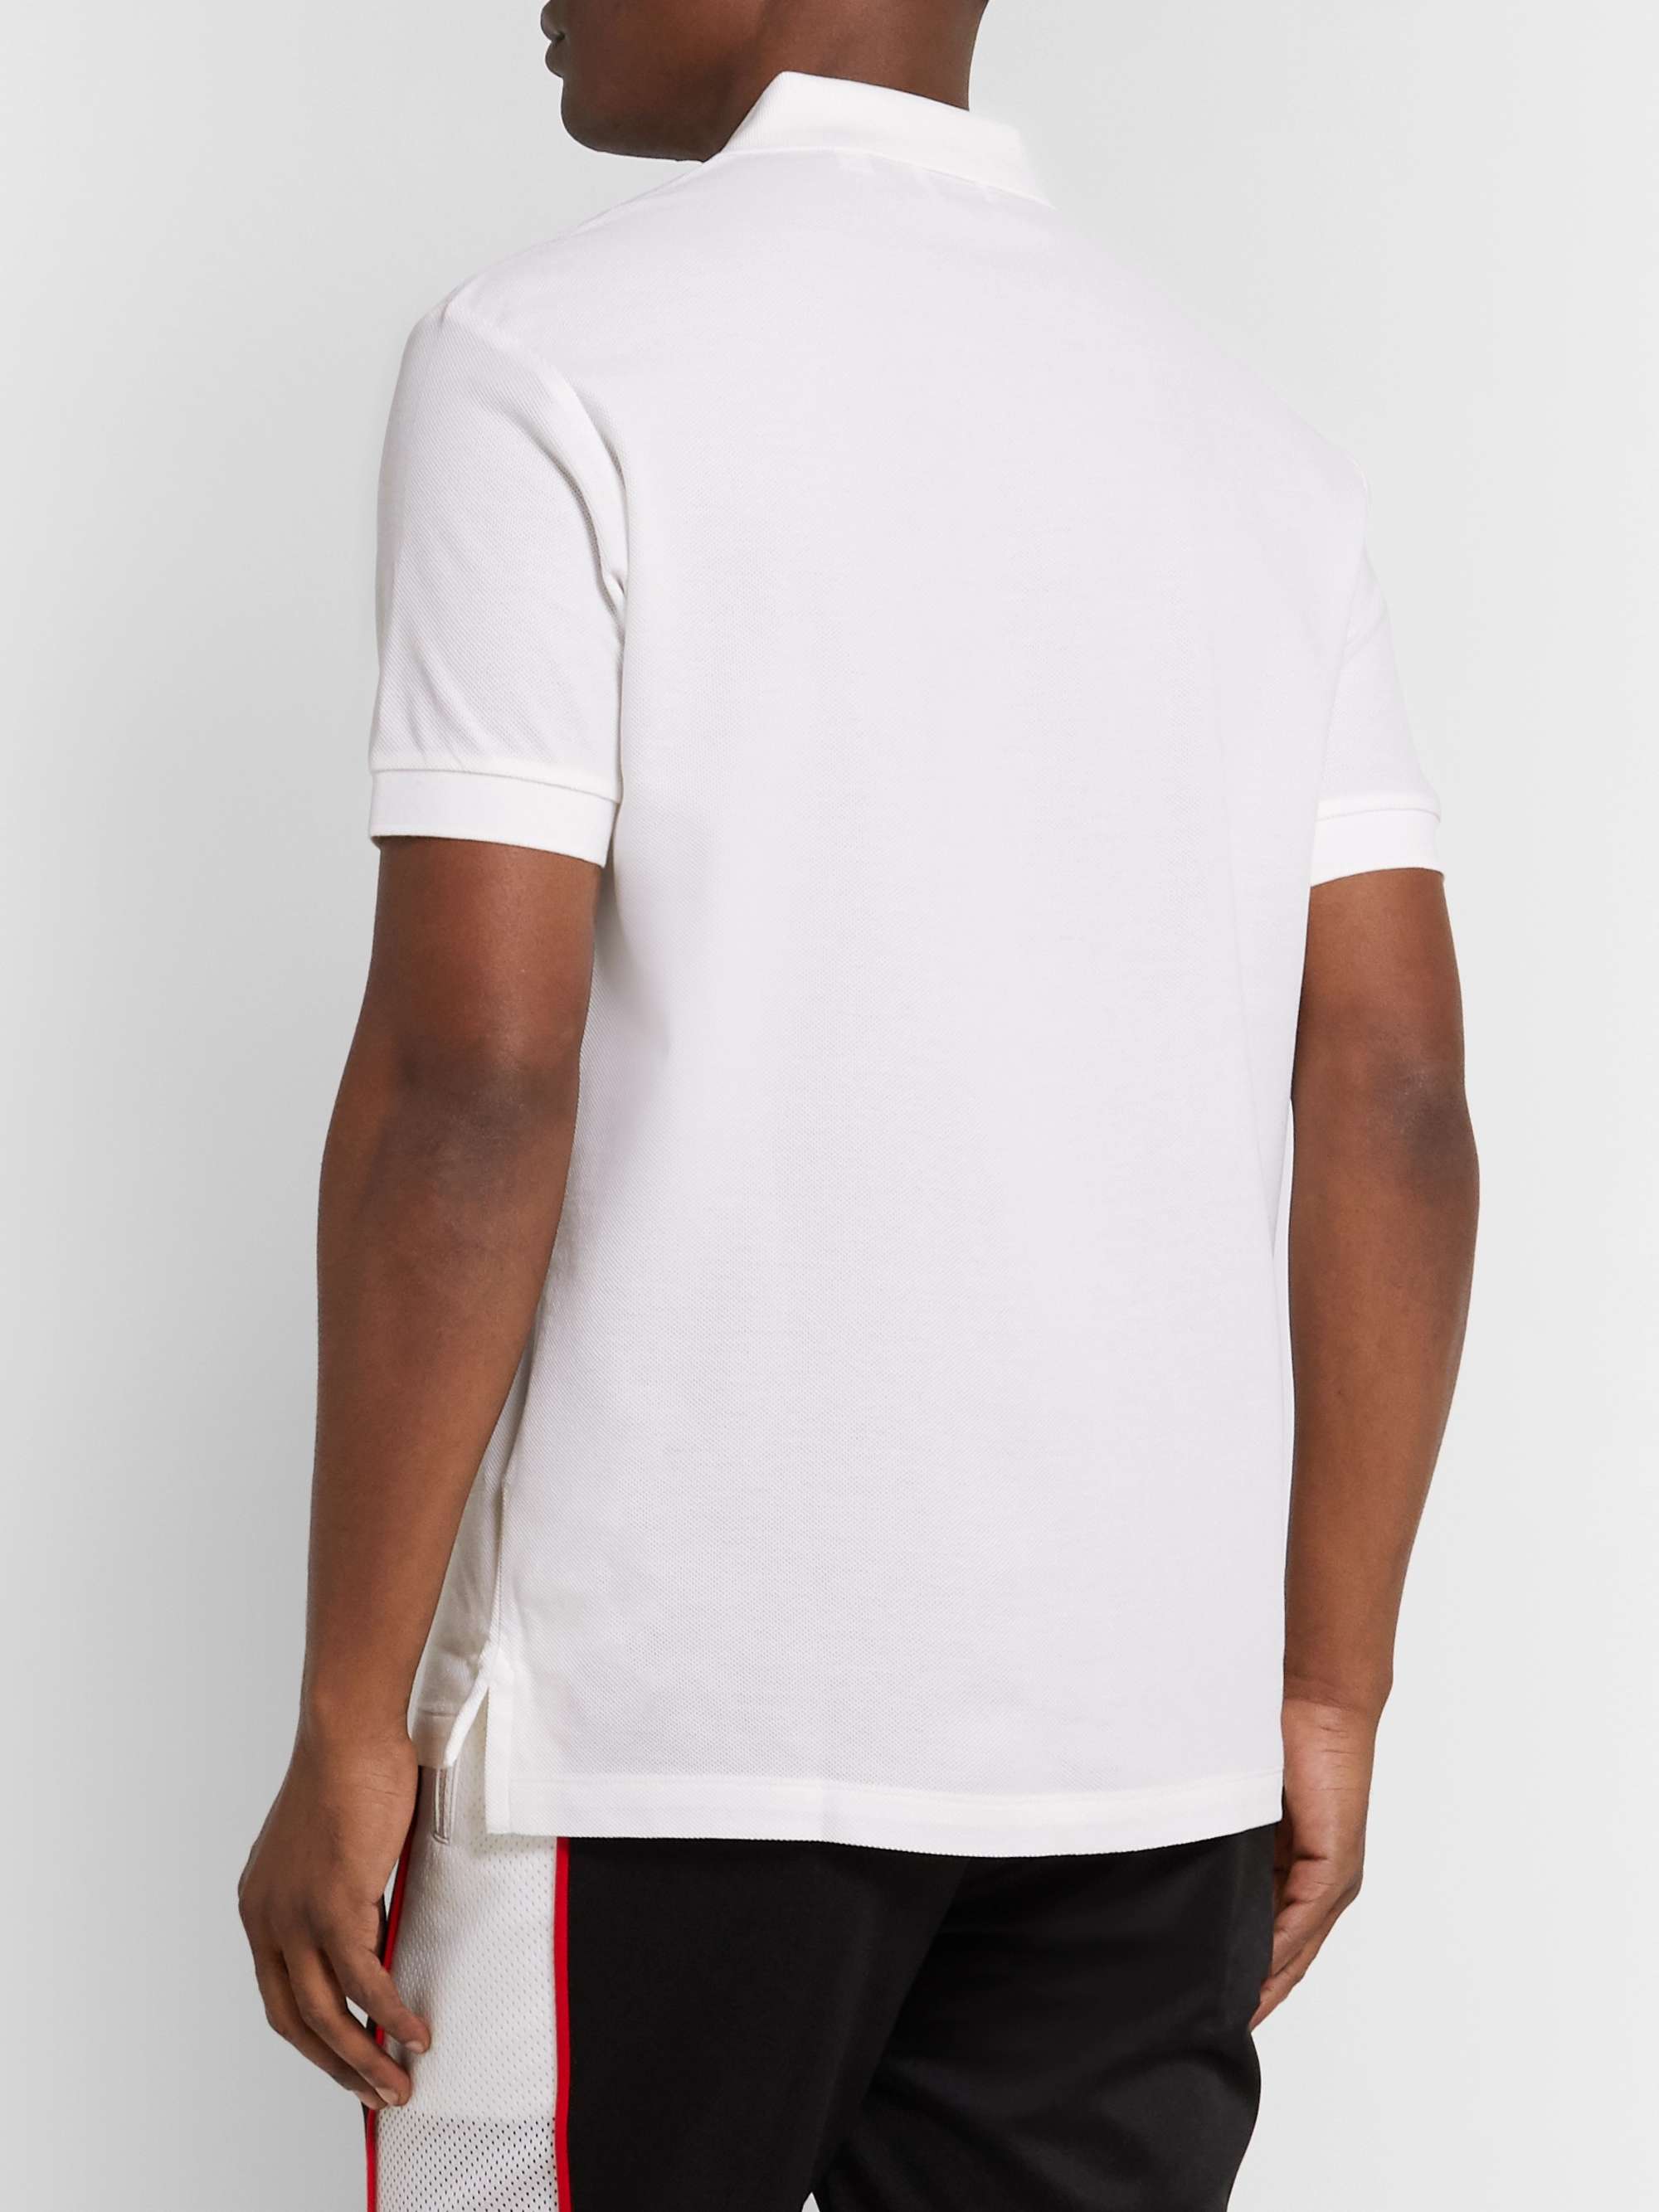 BURBERRY Slim-Fit Logo-Embroidered Cotton-Piqué Polo Shirt